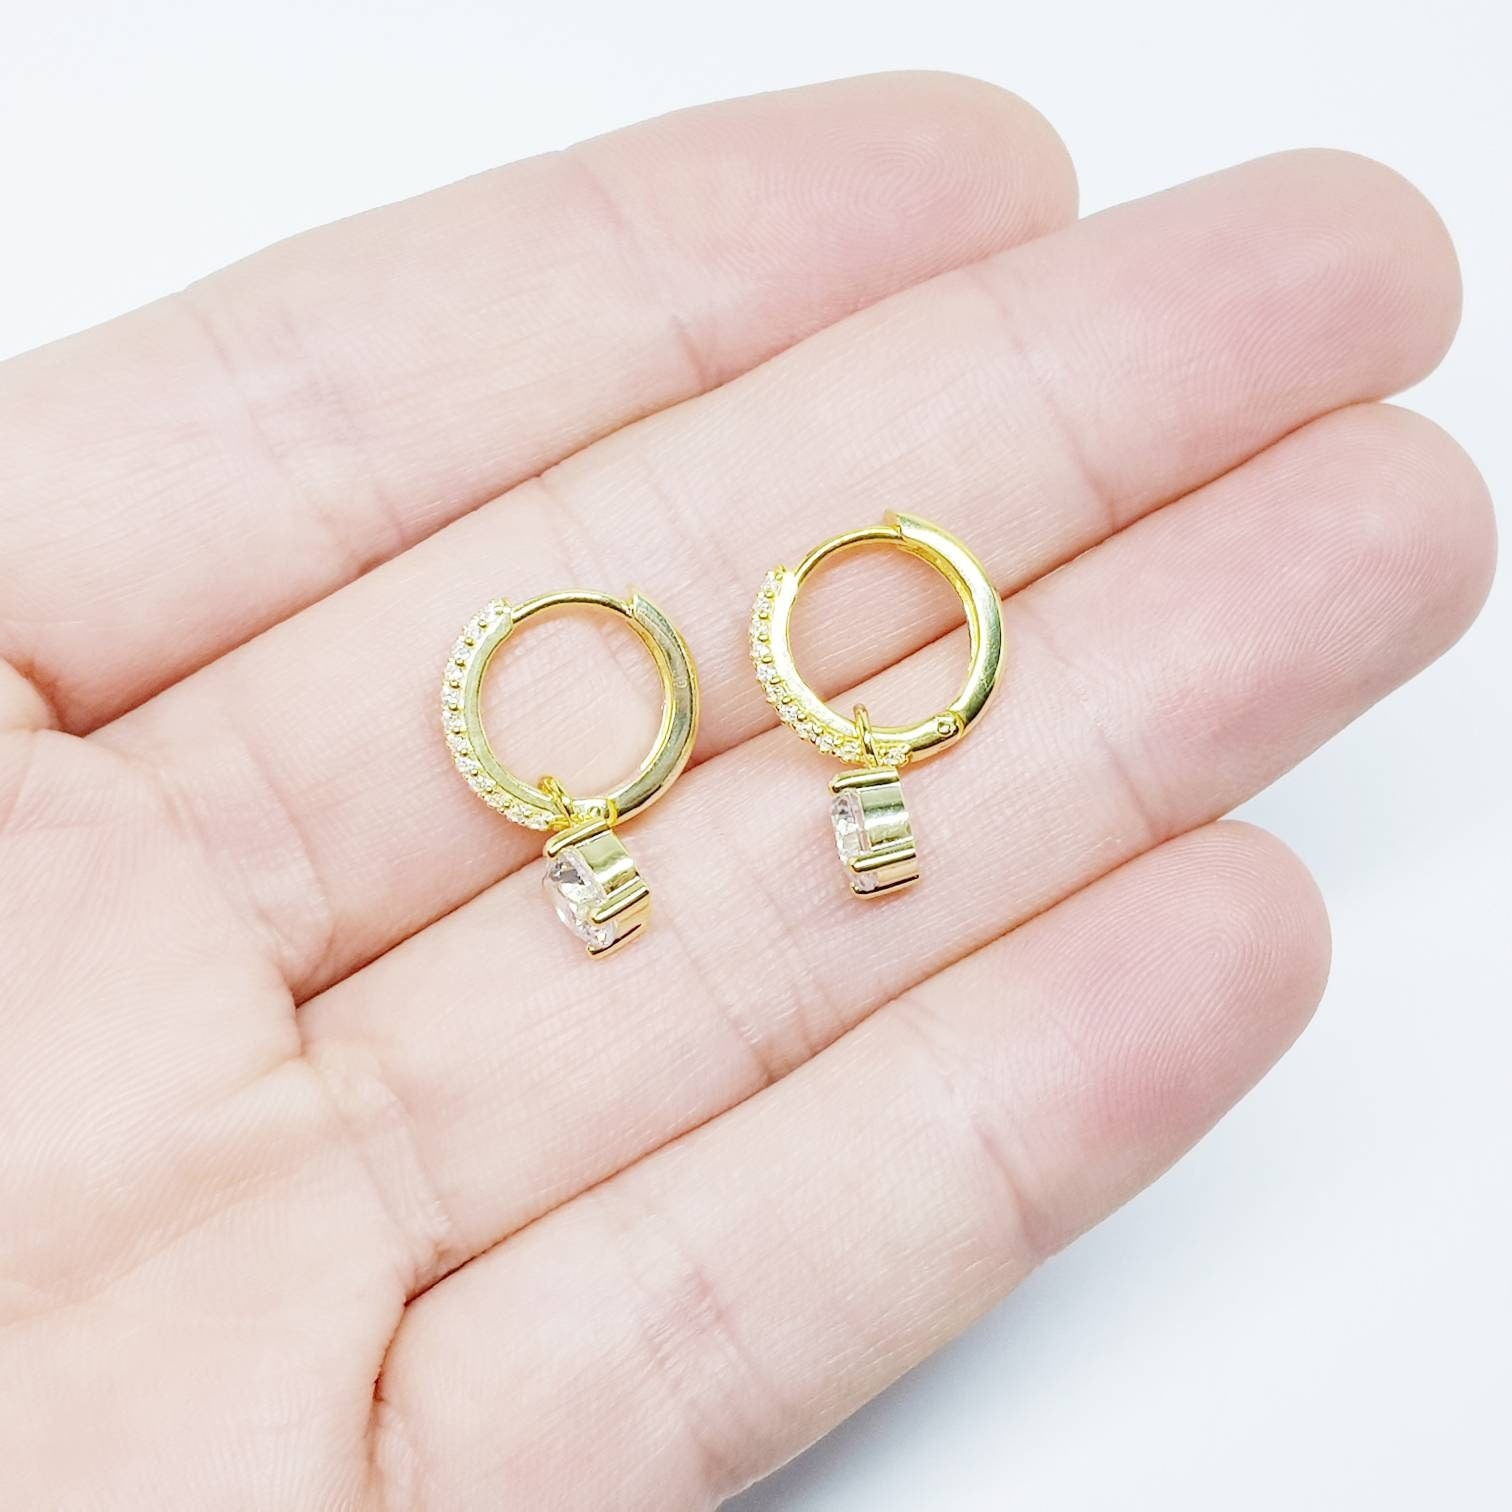 Gold hoop earrings with removable solitaire drop, two earrings in one, faux diamond huggie earrings